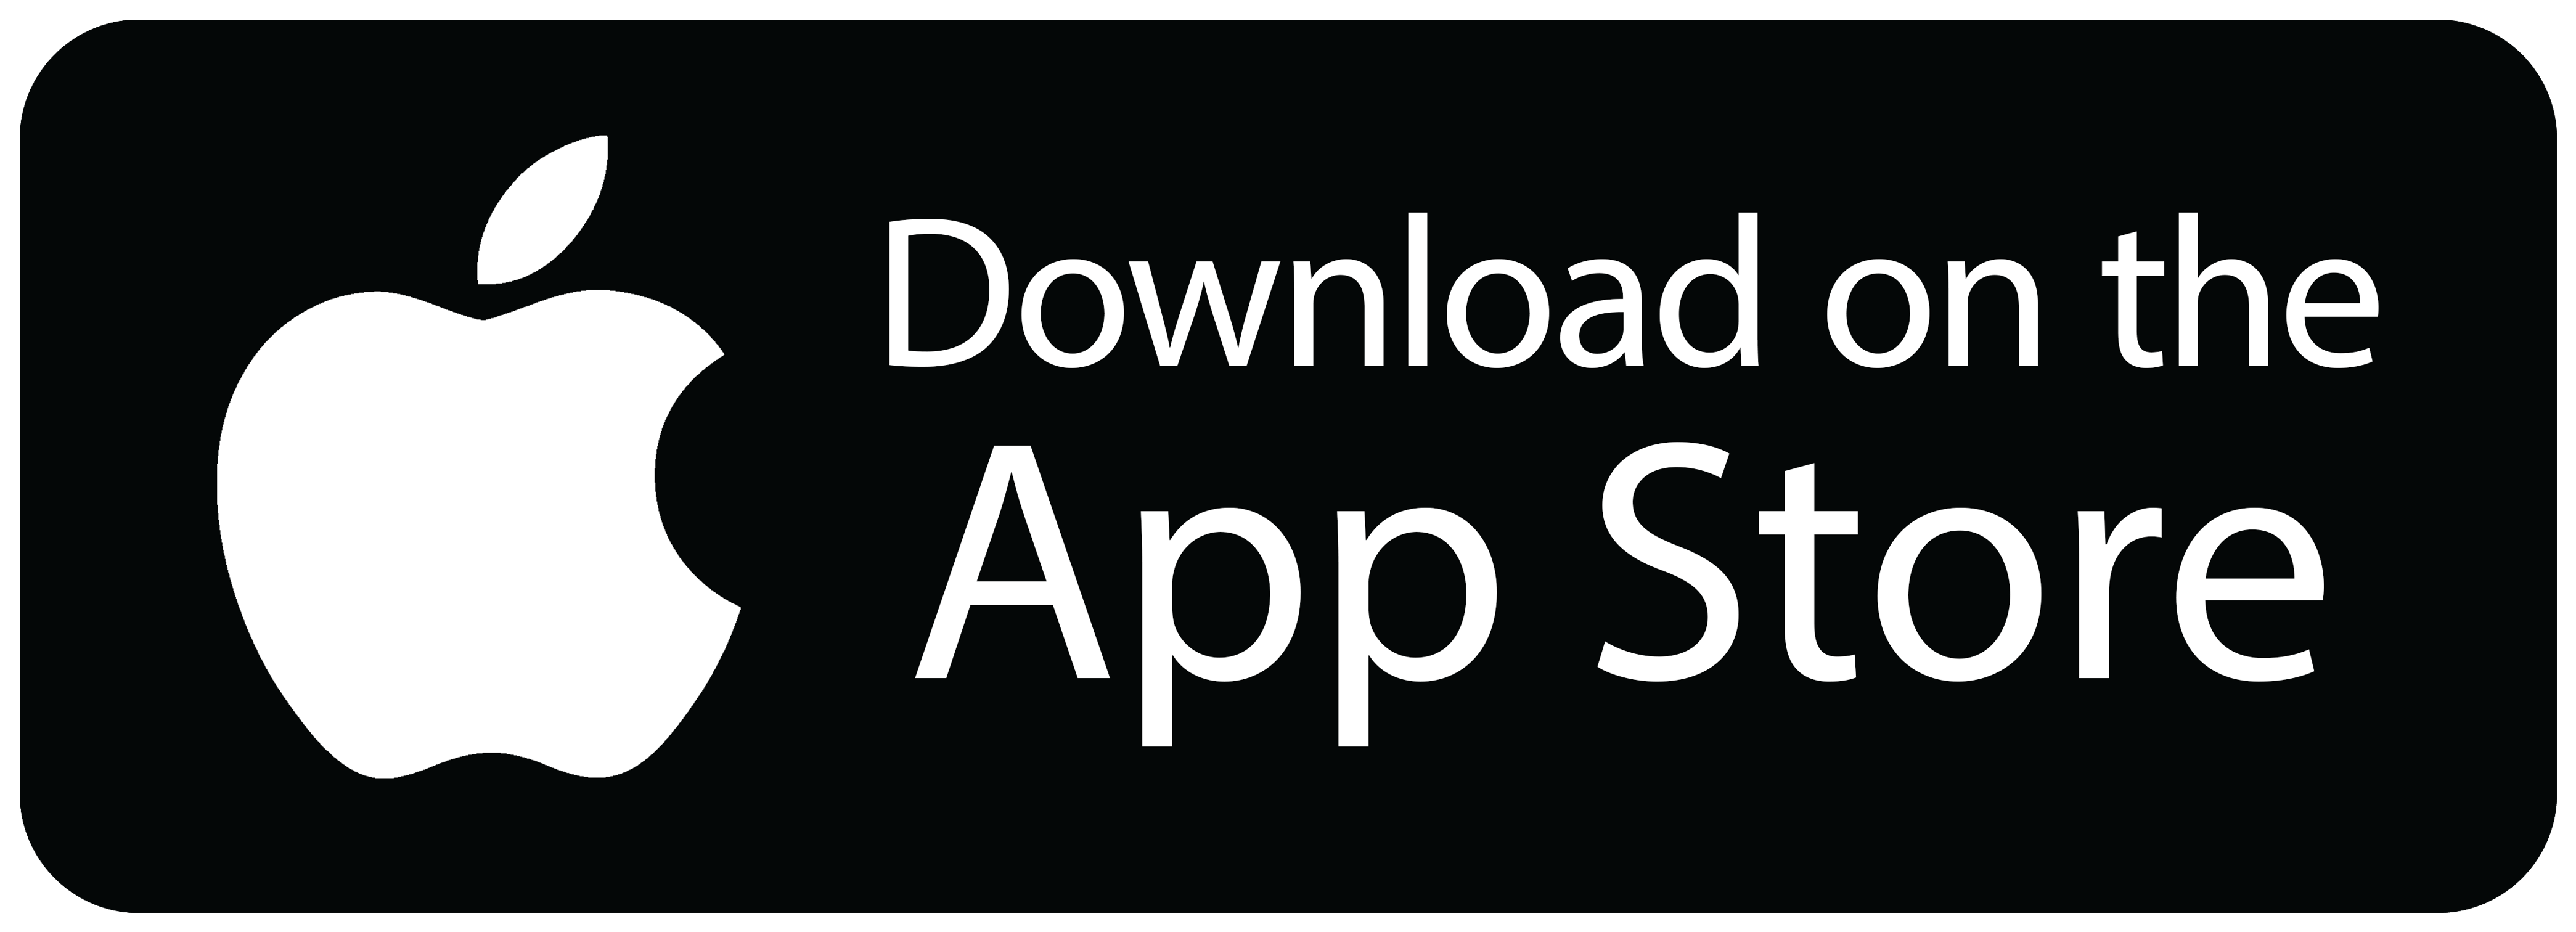 Download DubaiNow App in App Store